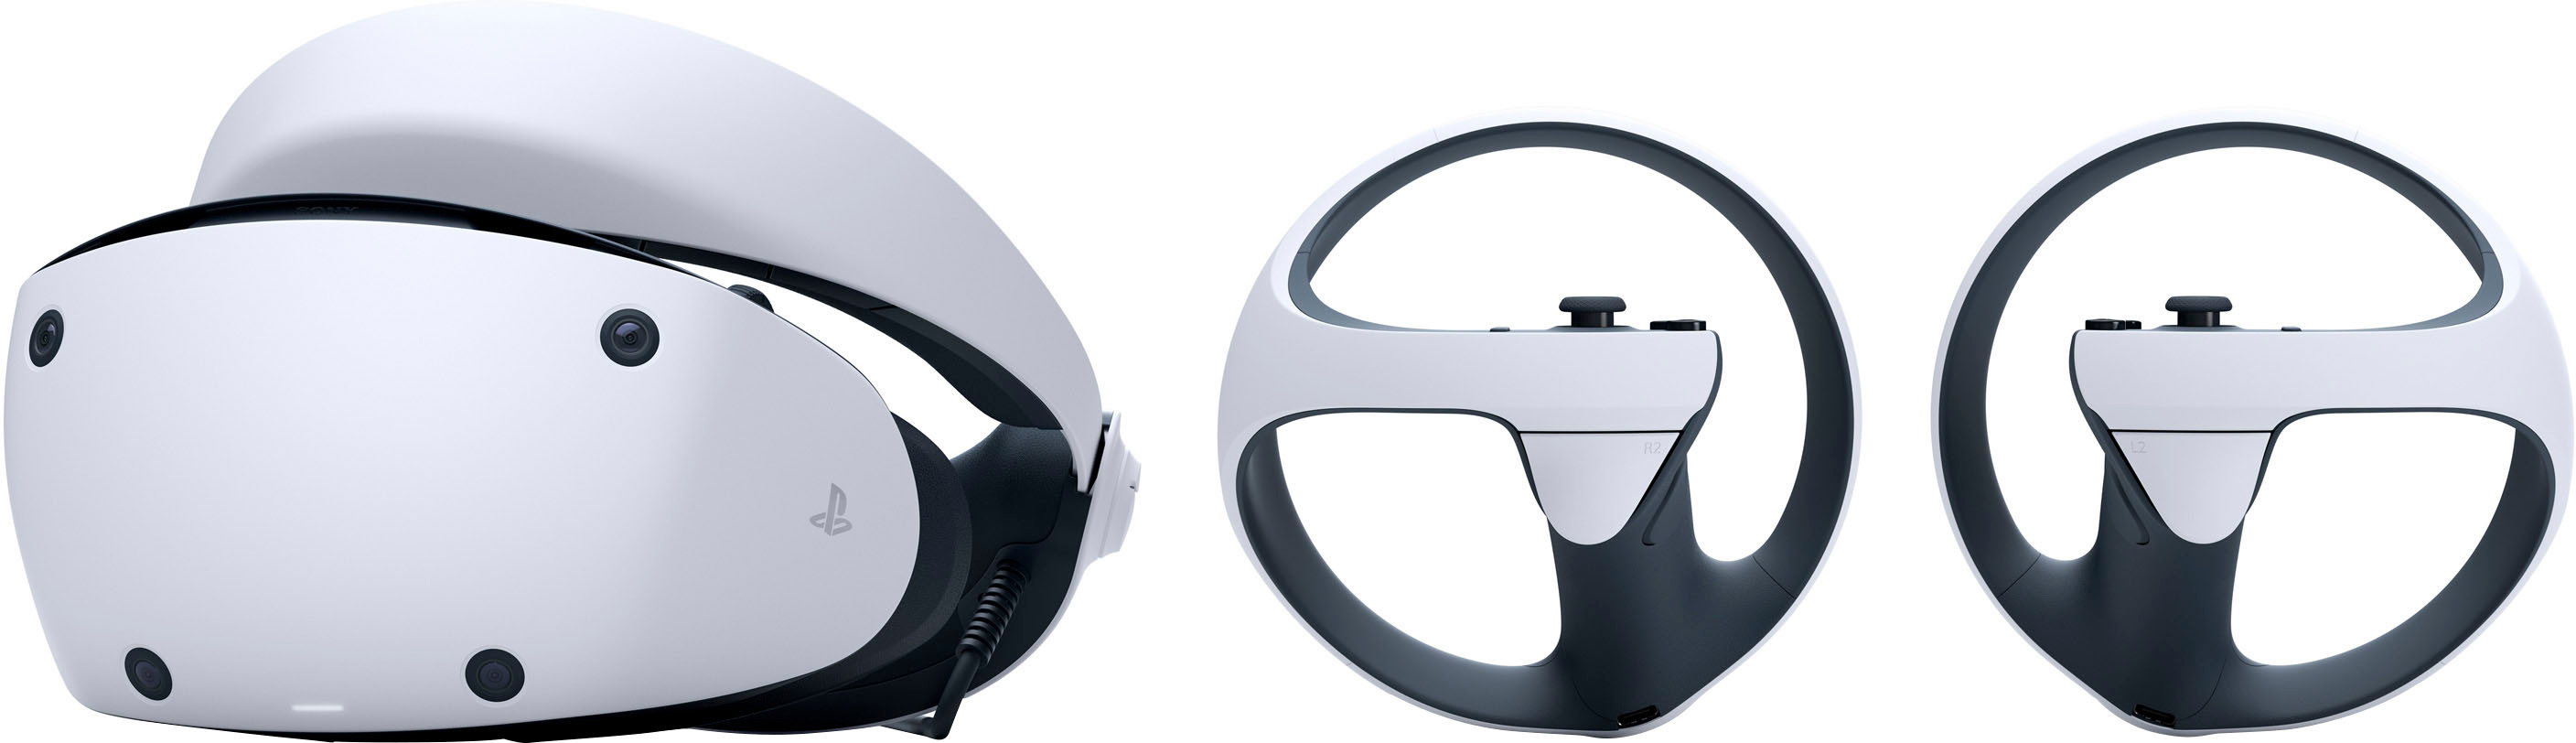 Sony PlayStation VR2 Multi 1000032456 - Best Buy